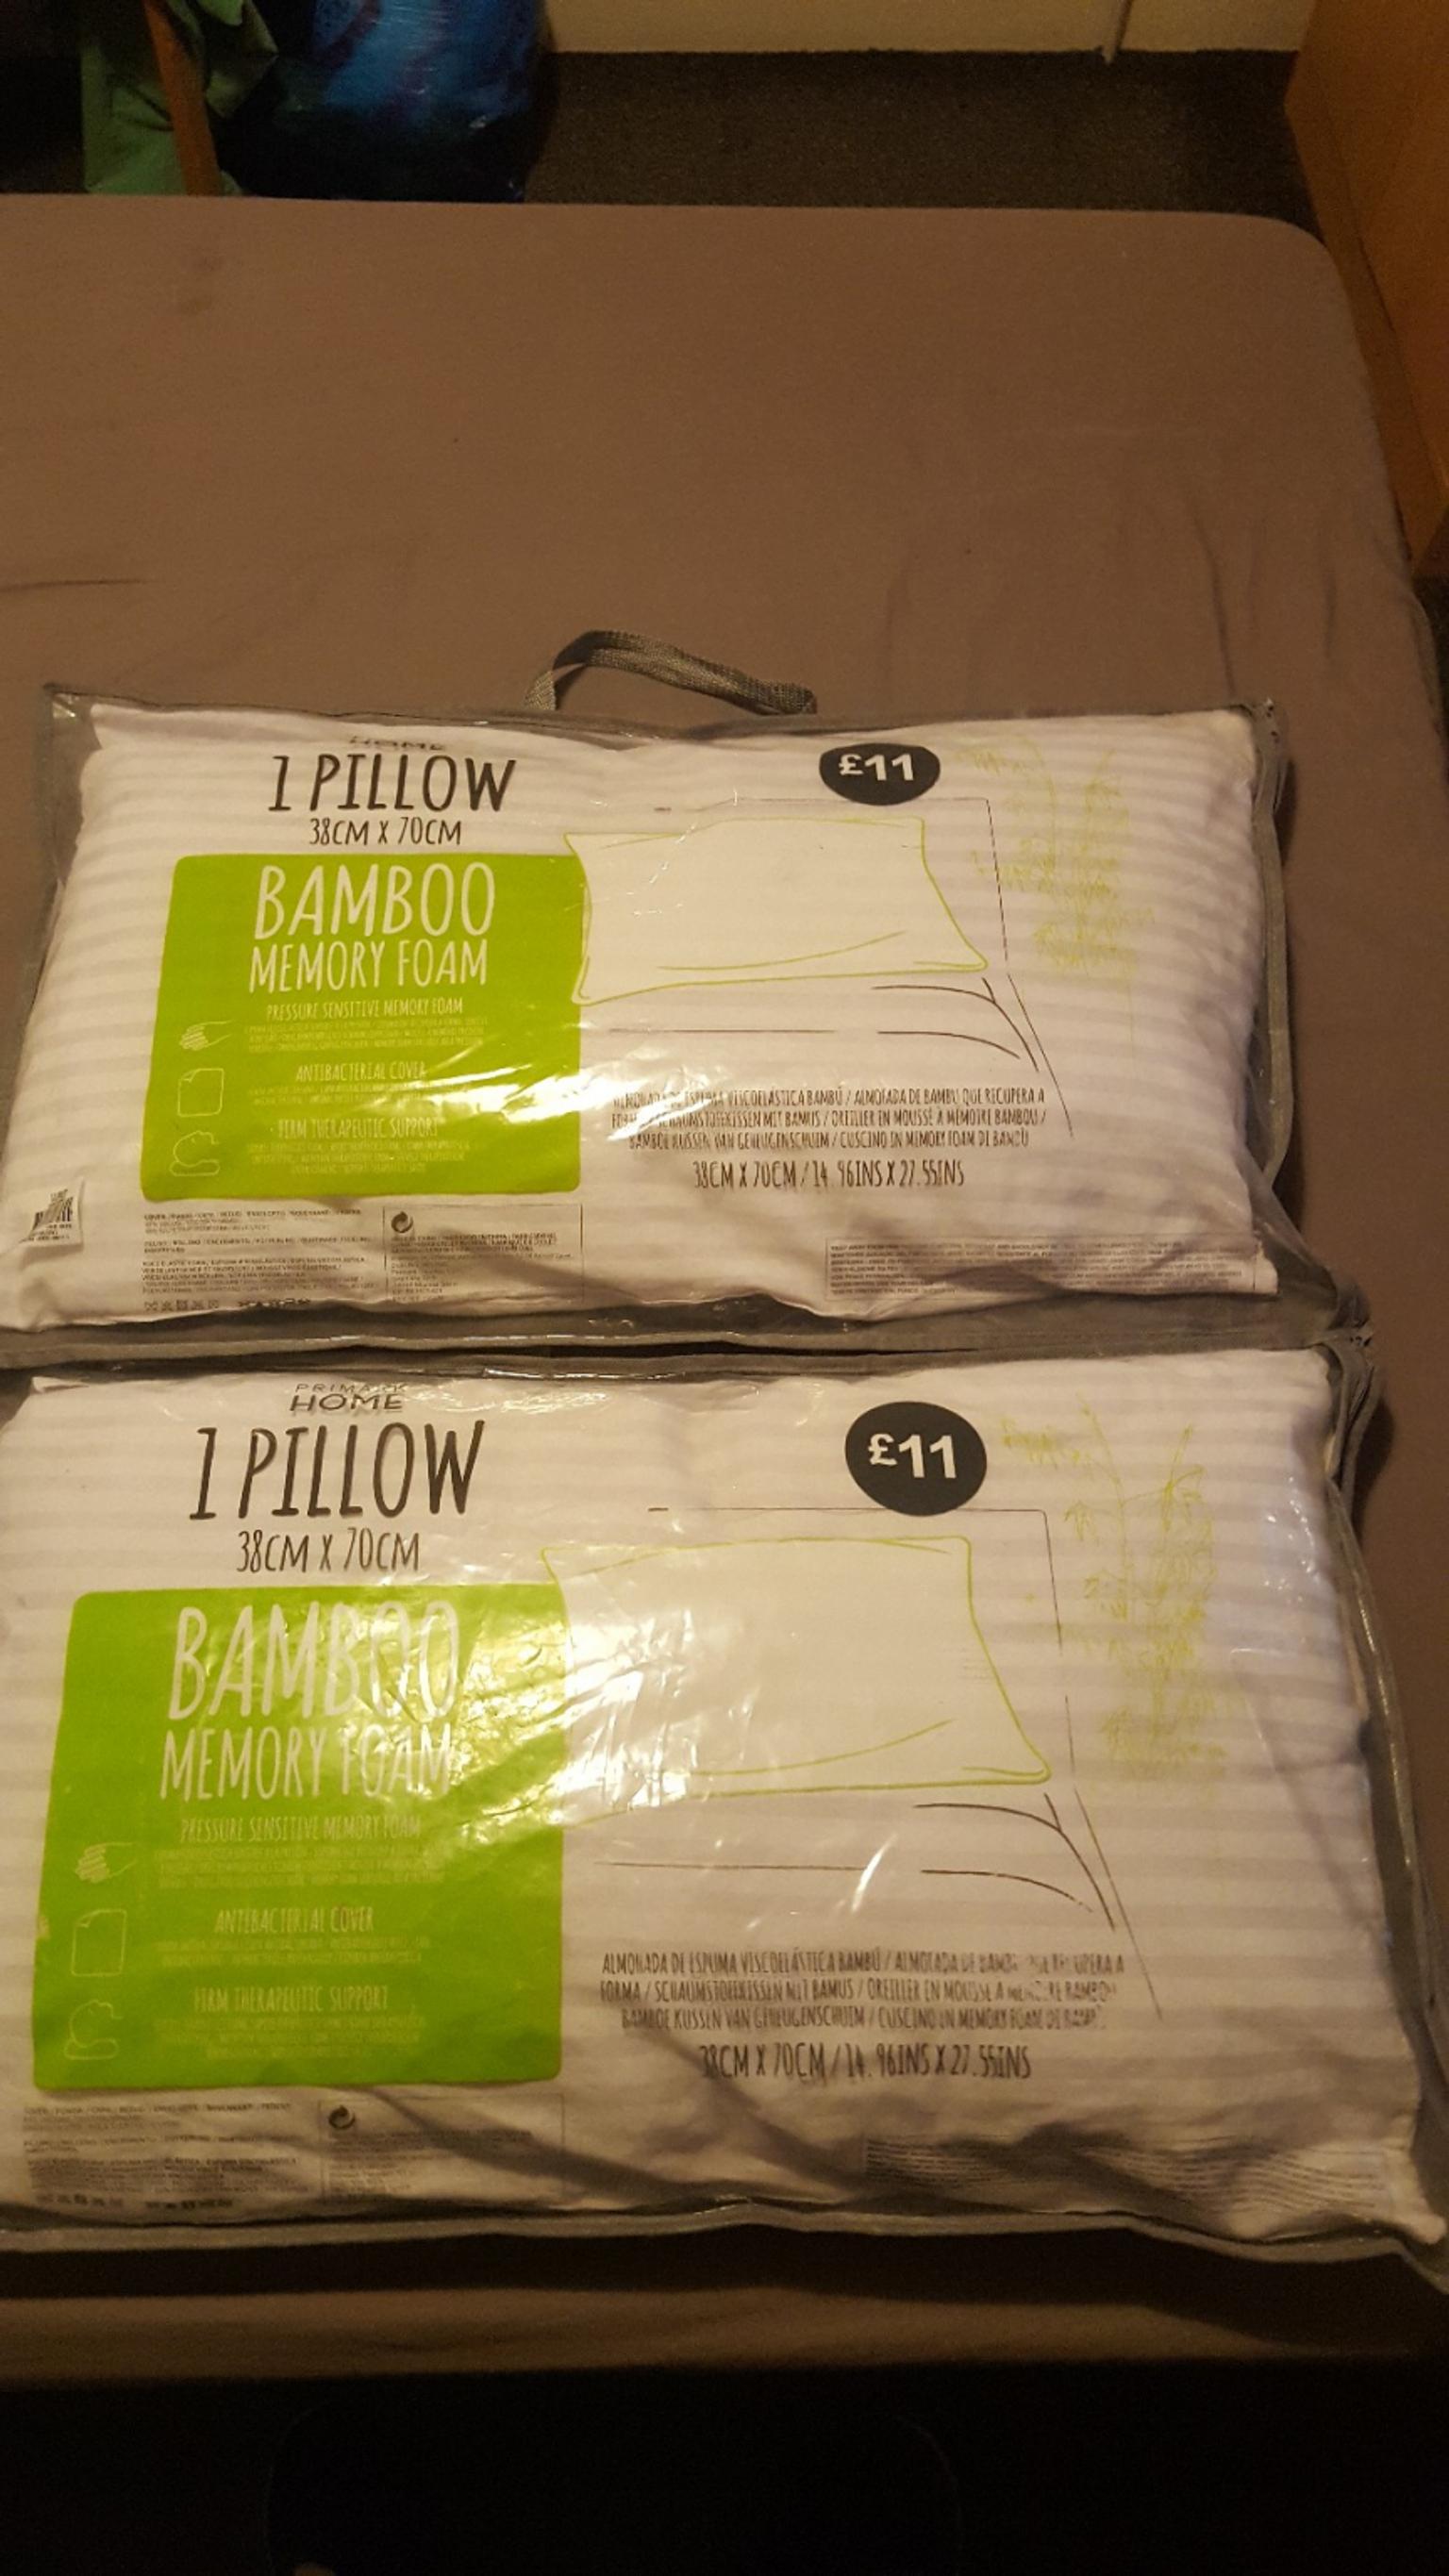 2 pillows Bamboo memory foam in 